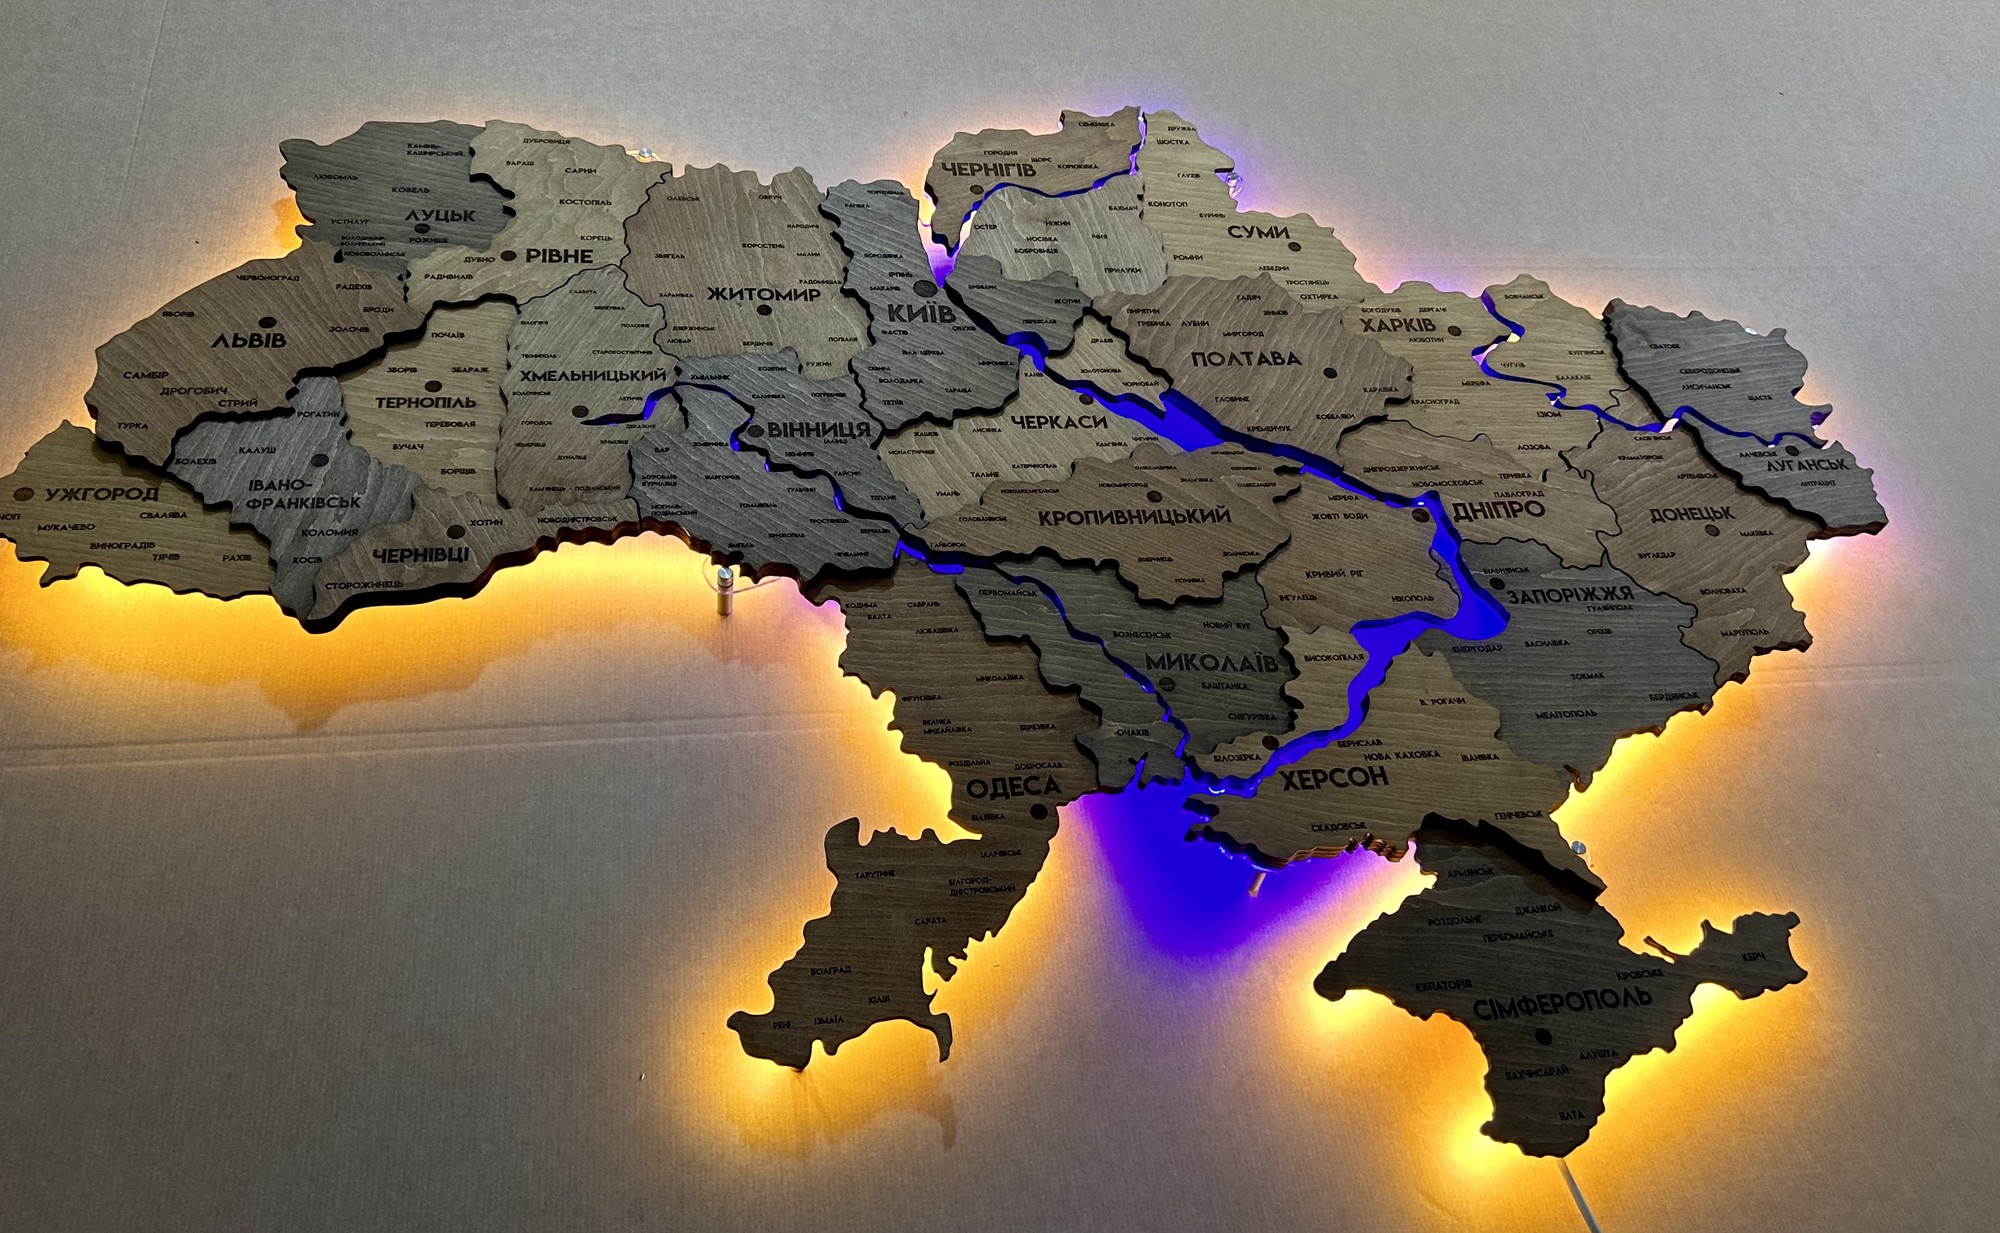 Detailed multilayer Ukraine LED map with backlighting of rivers color Helsinki 250x167 cm (98.4*65.7 inch)